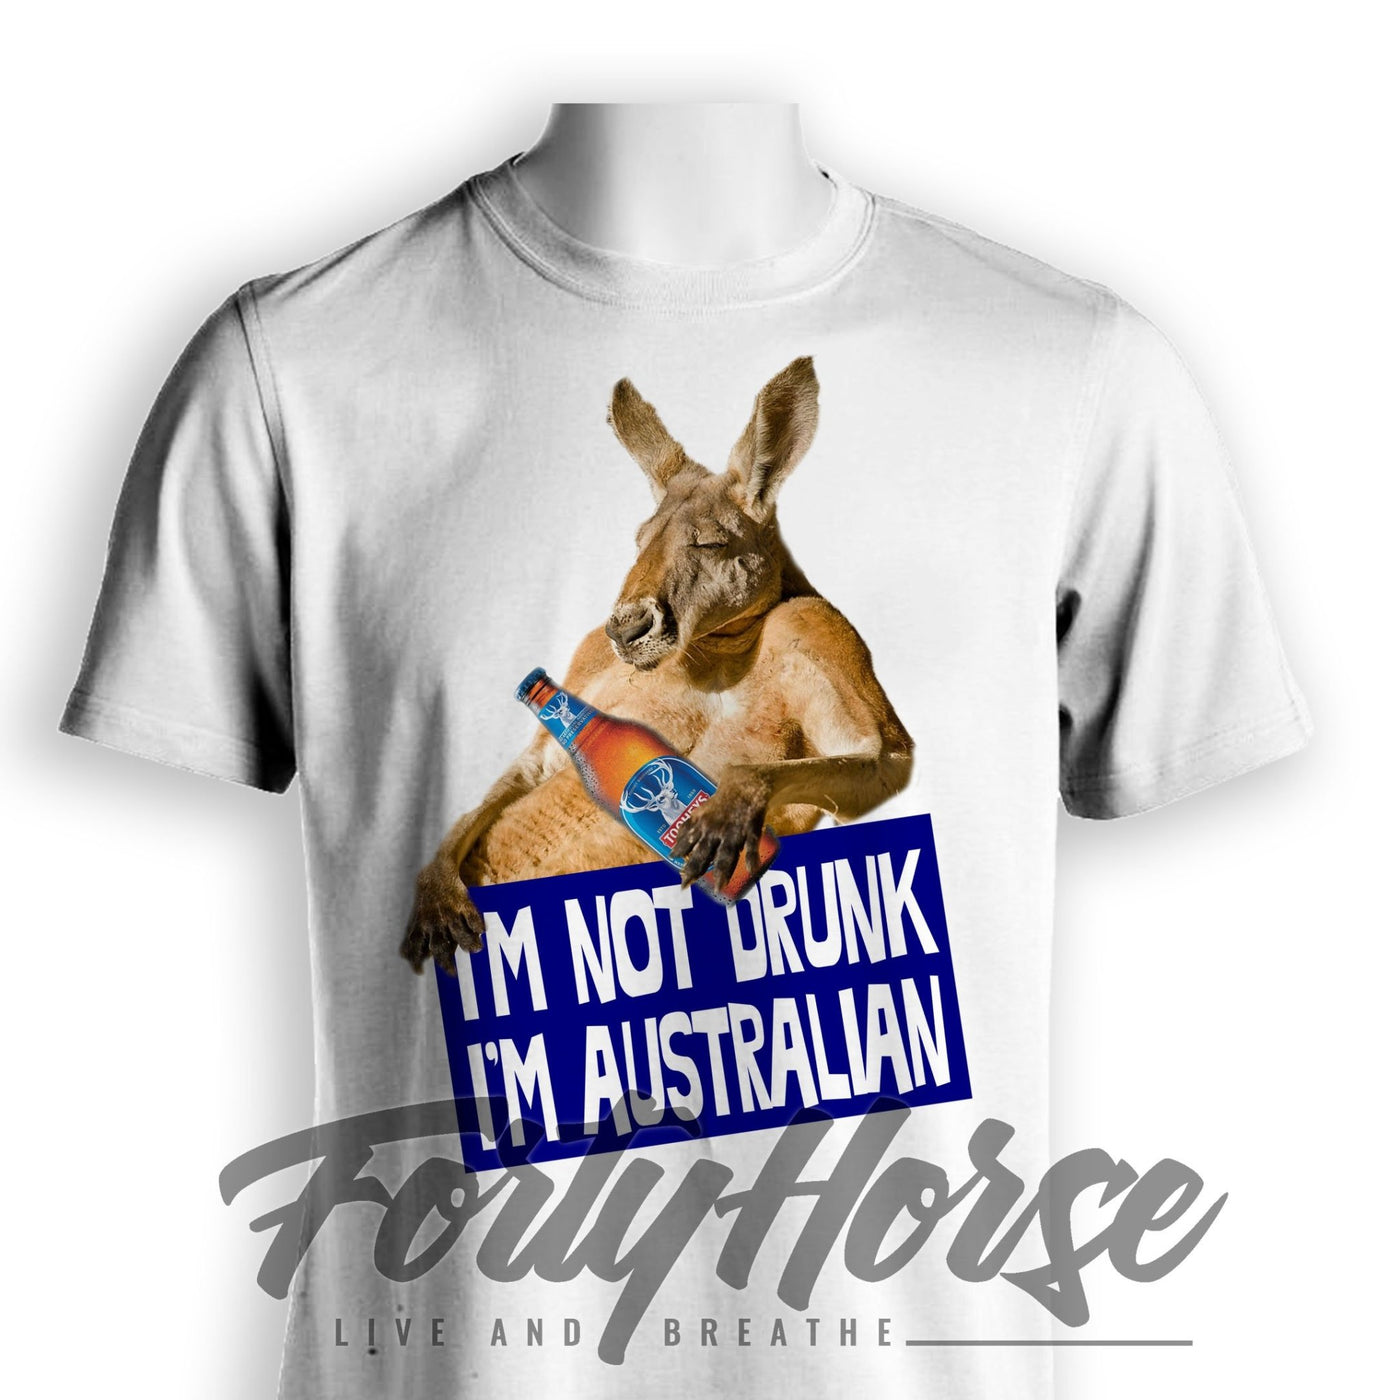 I'm Not Drunk, I'm Australian